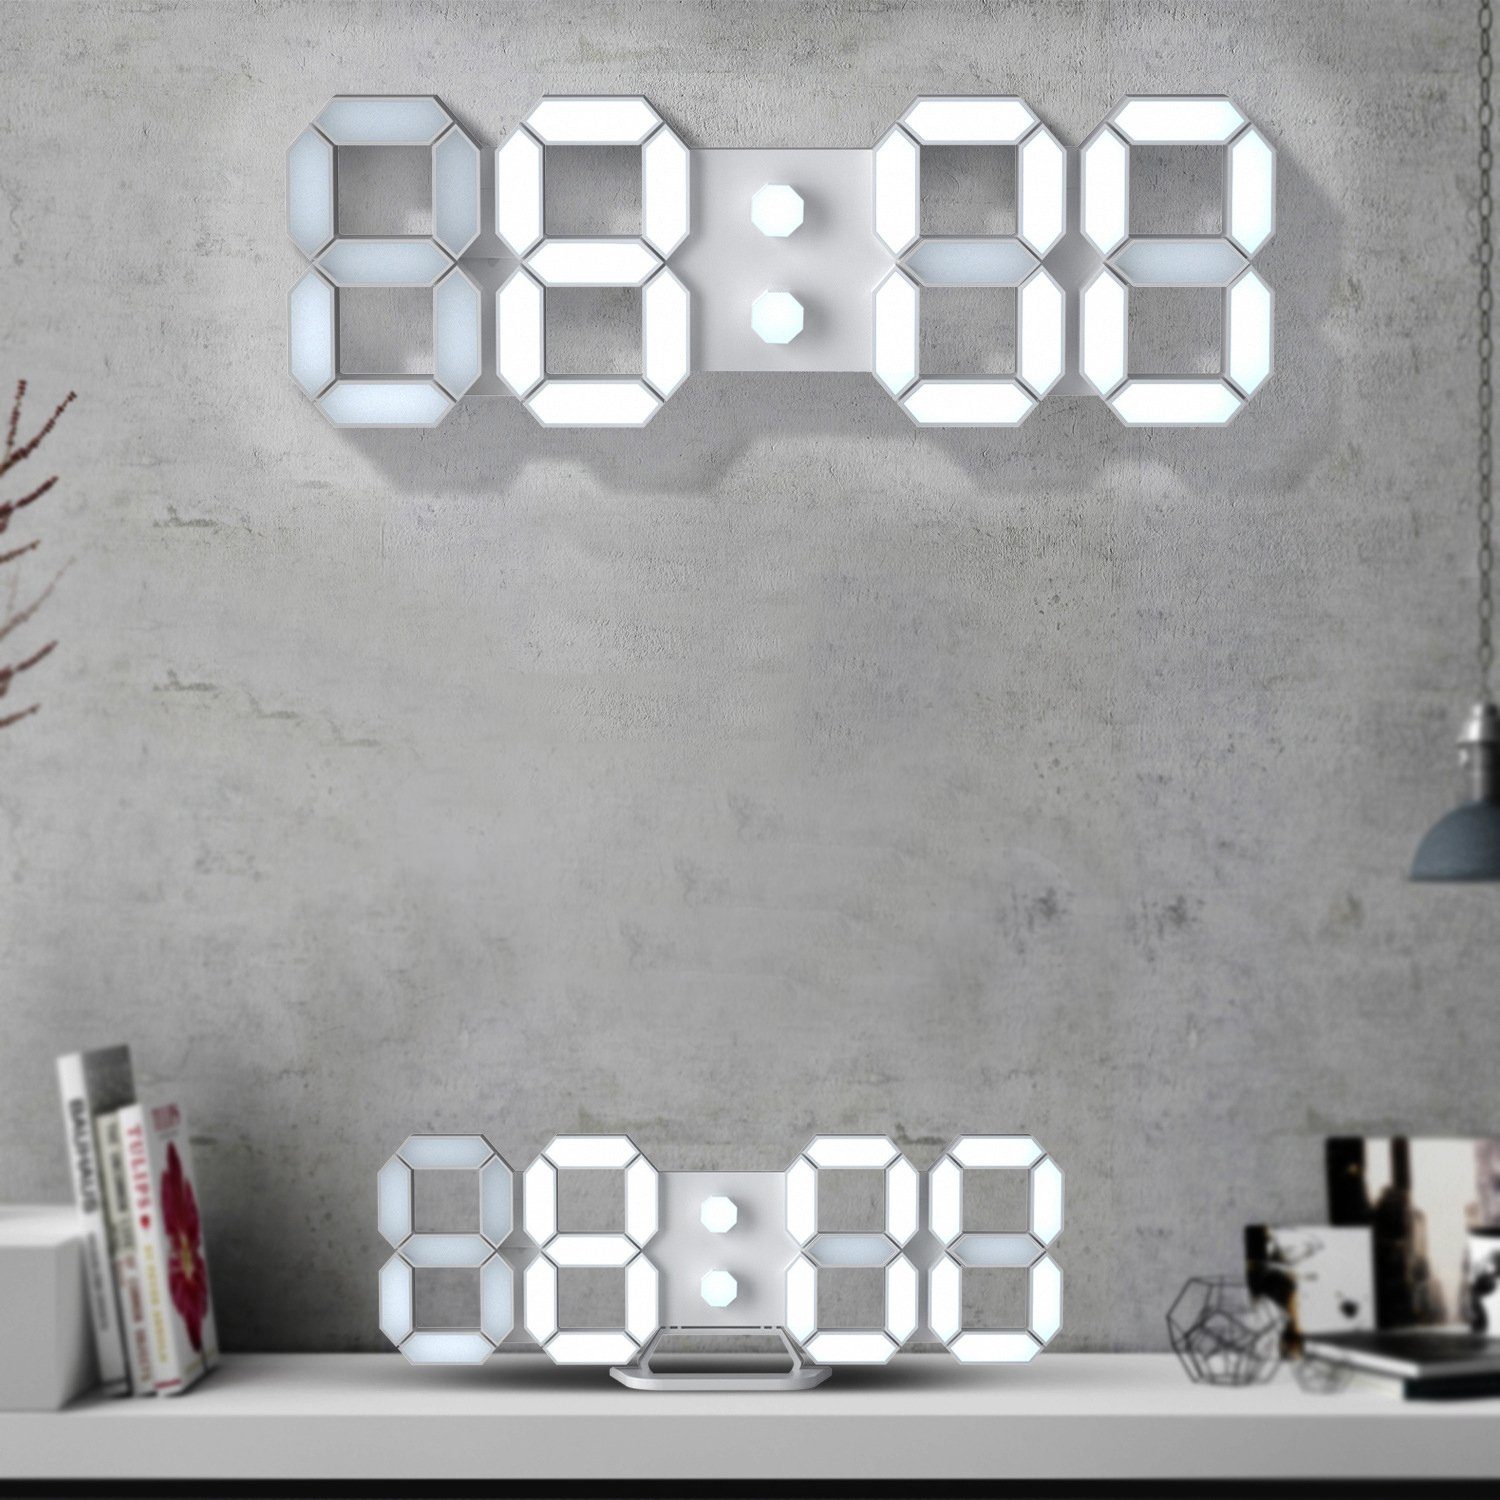 Wecker Wanduhr LED (dekorative Wanduhr Digital Uhr) Jormftte